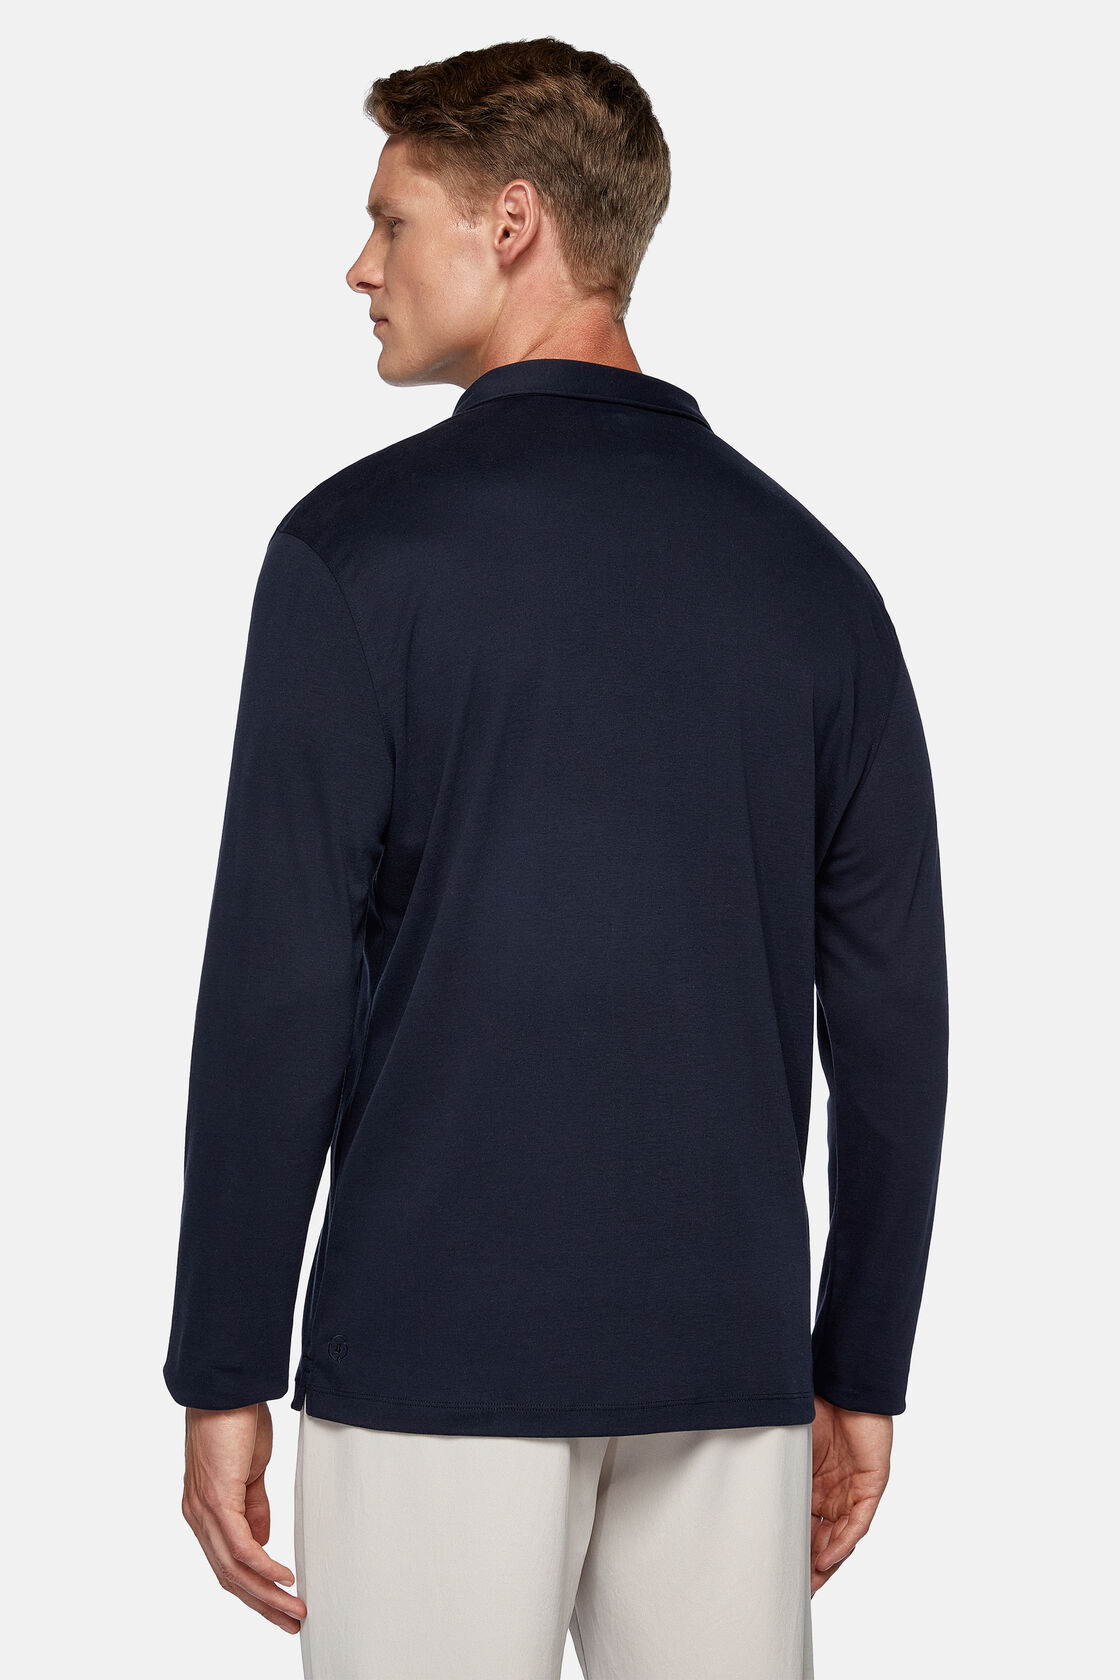 Regular fit poloshirt in een katoenmix high-performance jersey, Navy blue, hi-res